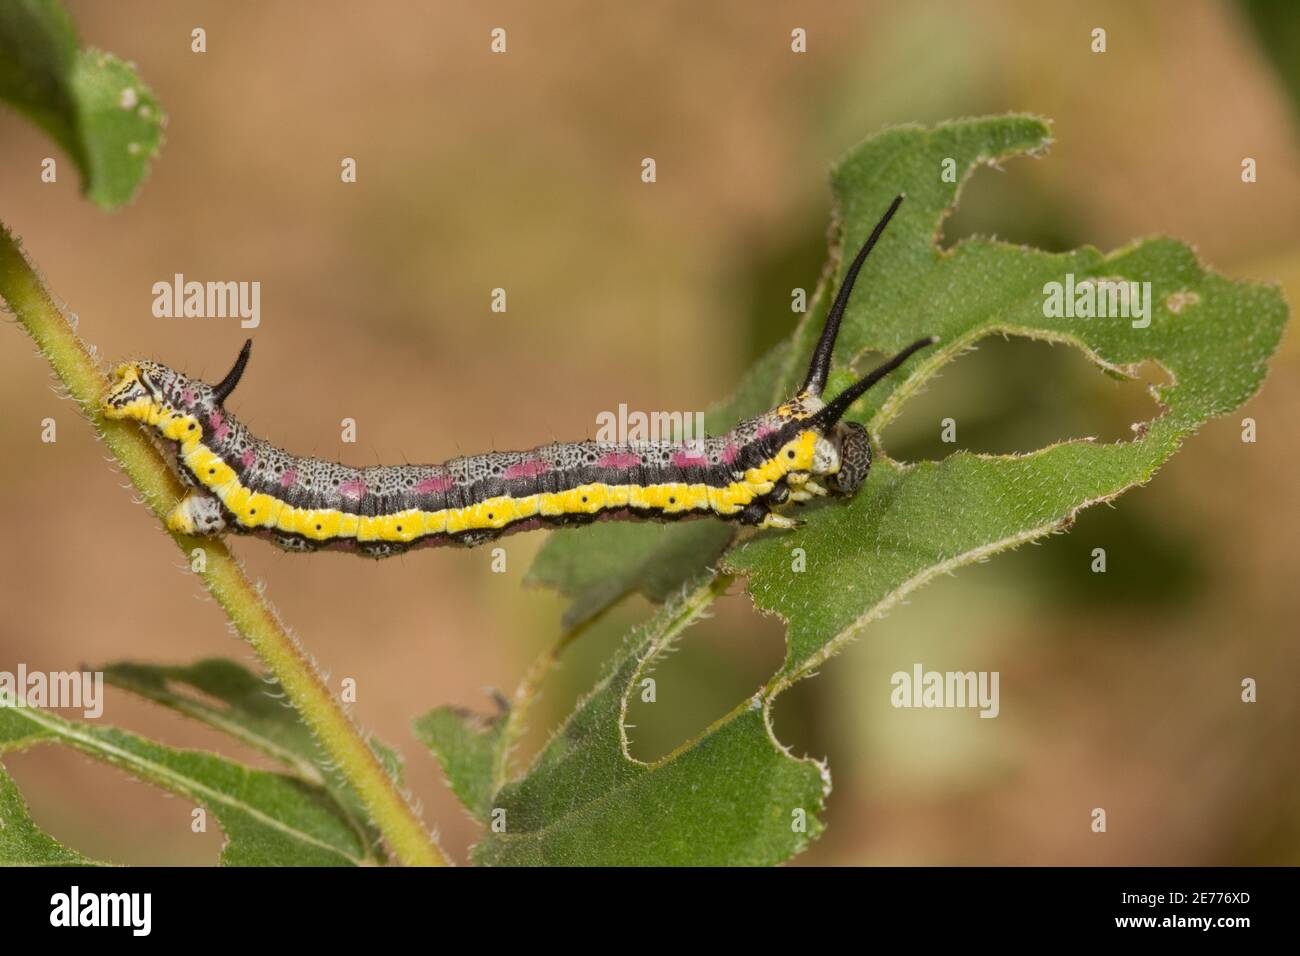 Geometrid Moth larva, Ceratonyx arizonensis, Geometridae. Feeding on Heartleaf Goldeneye, Viguiera cordifolia. Length 33 mm. Same as 14100017-14100022 Stock Photo